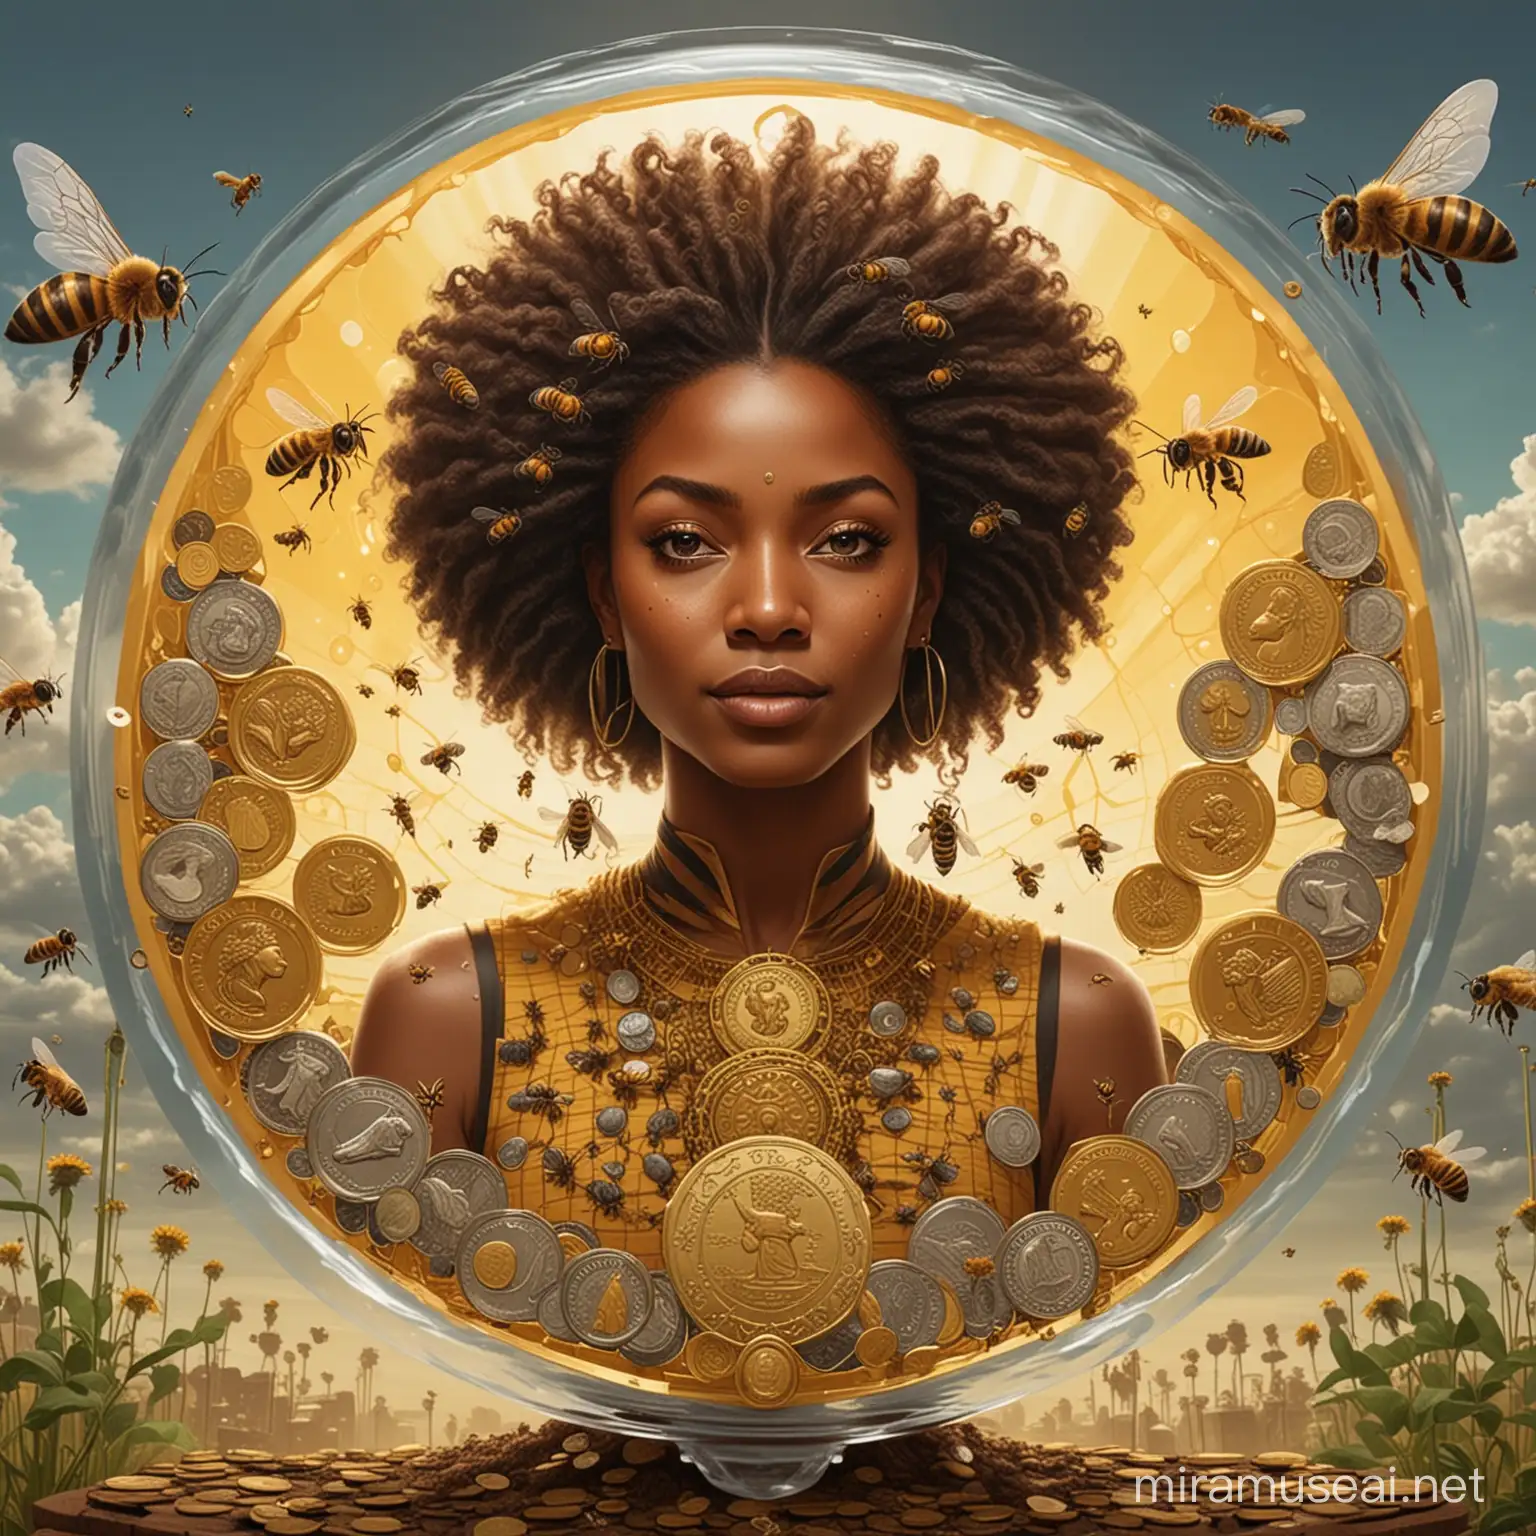 Modern Industrious 2030 Tarot Card AfroIndigenous Queen Bee amidst Honeybee Prosperity